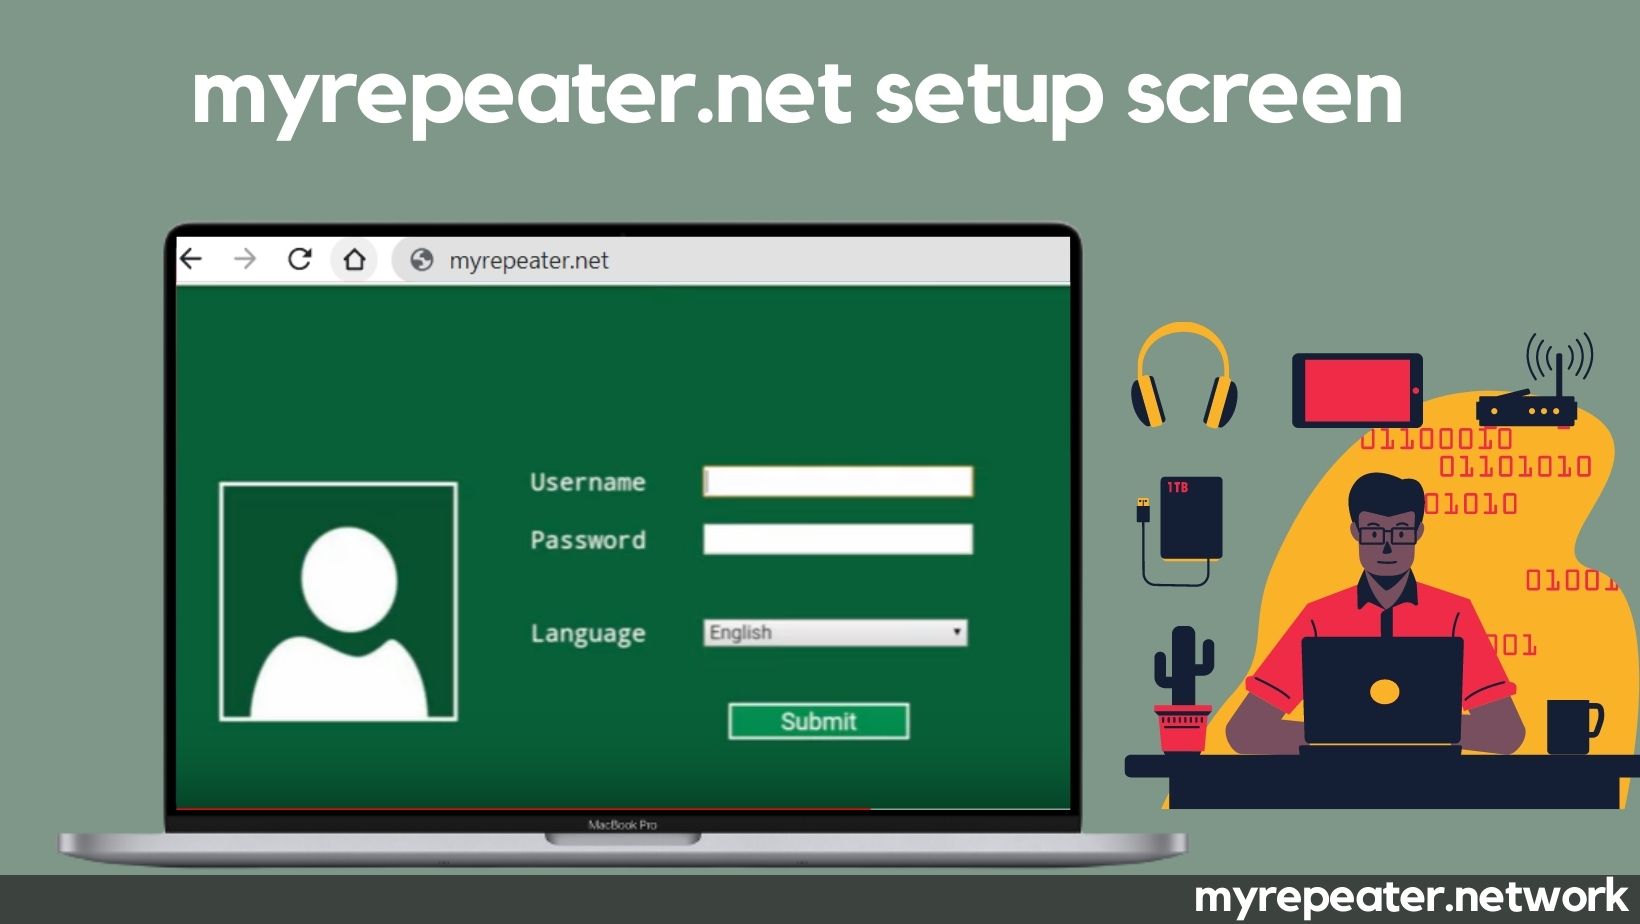 myrepeater.net setup screen